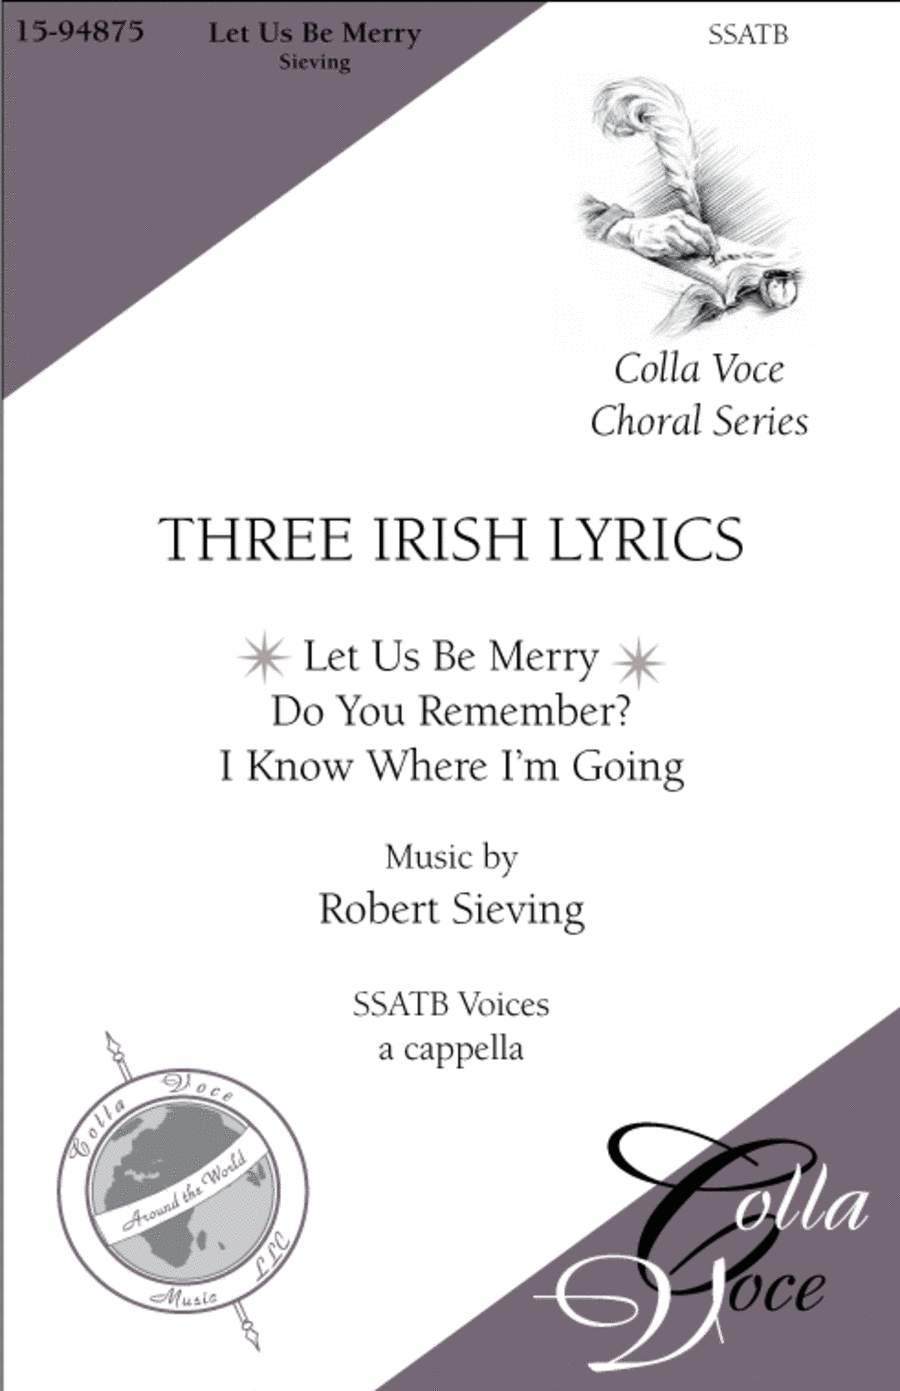 Let Us Be Merry: from "Three Irish Lyrics"